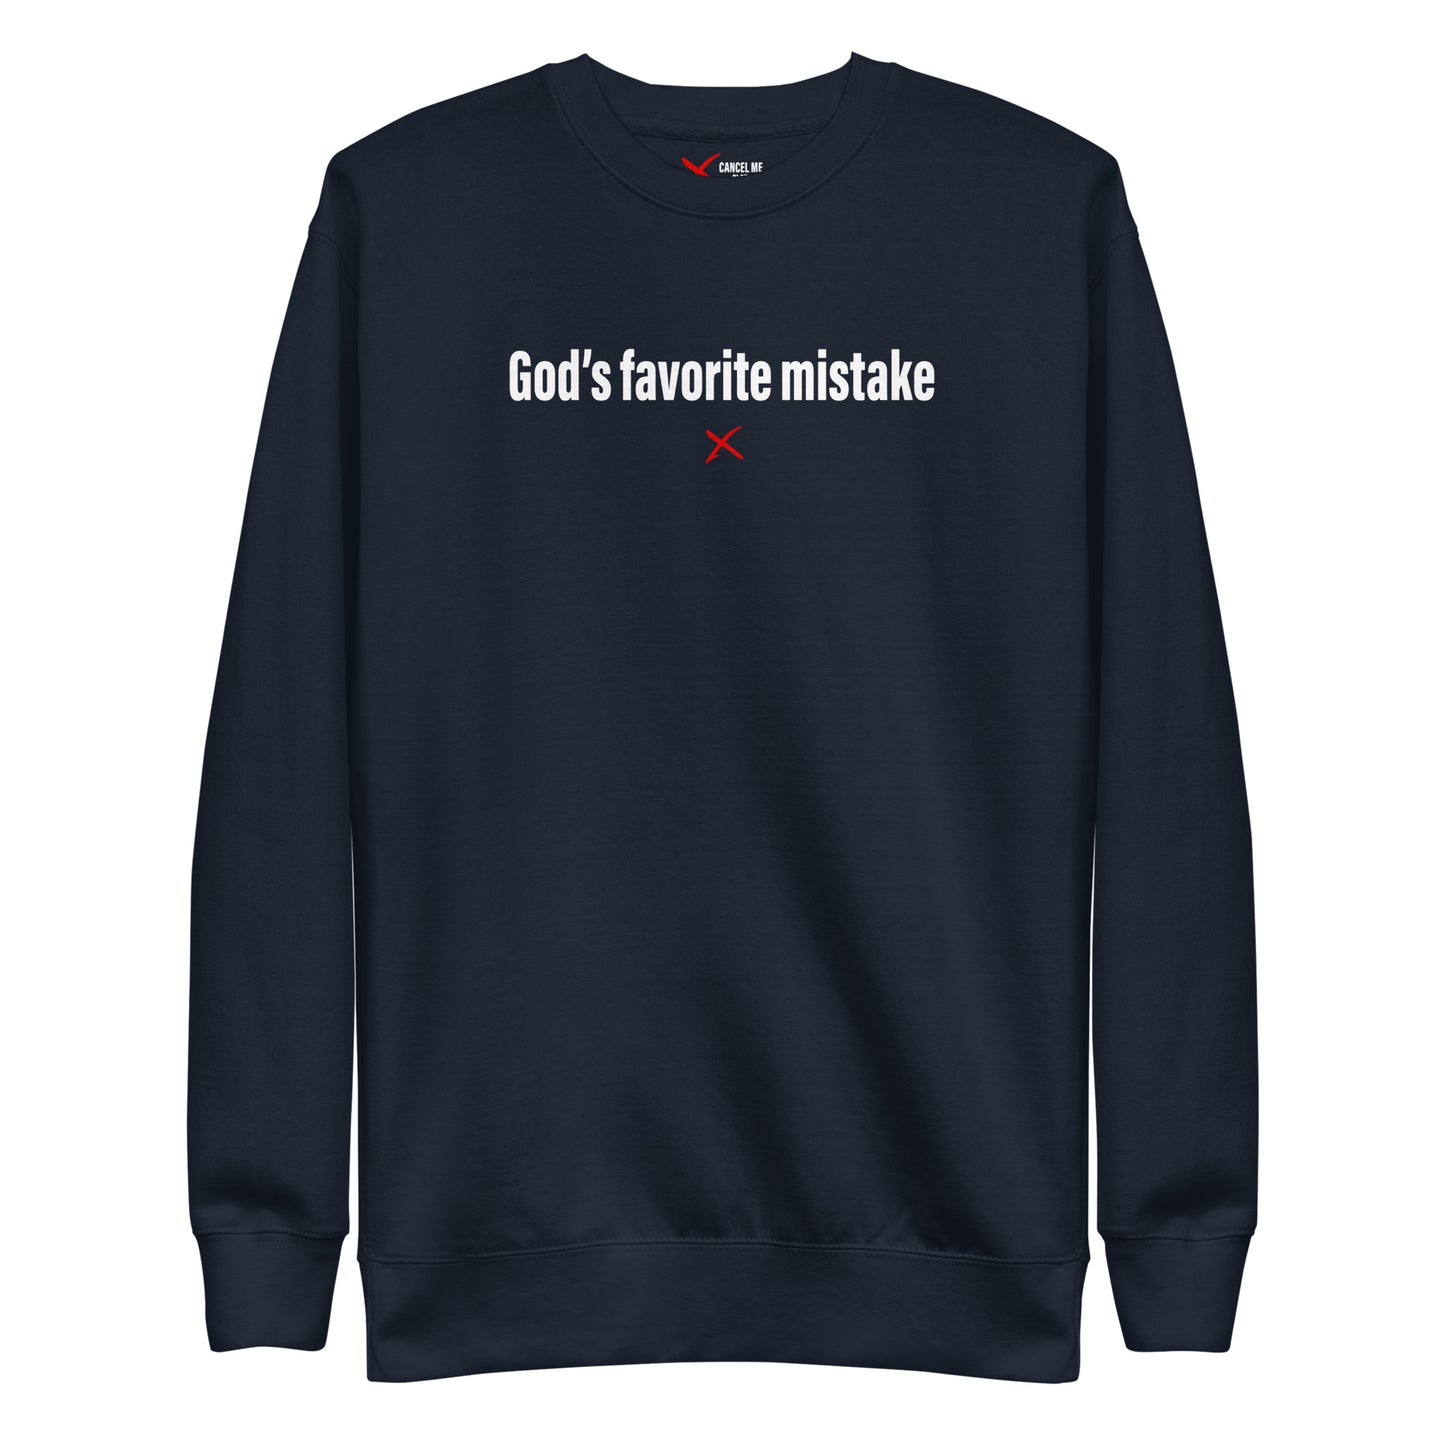 God's favorite mistake - Sweatshirt